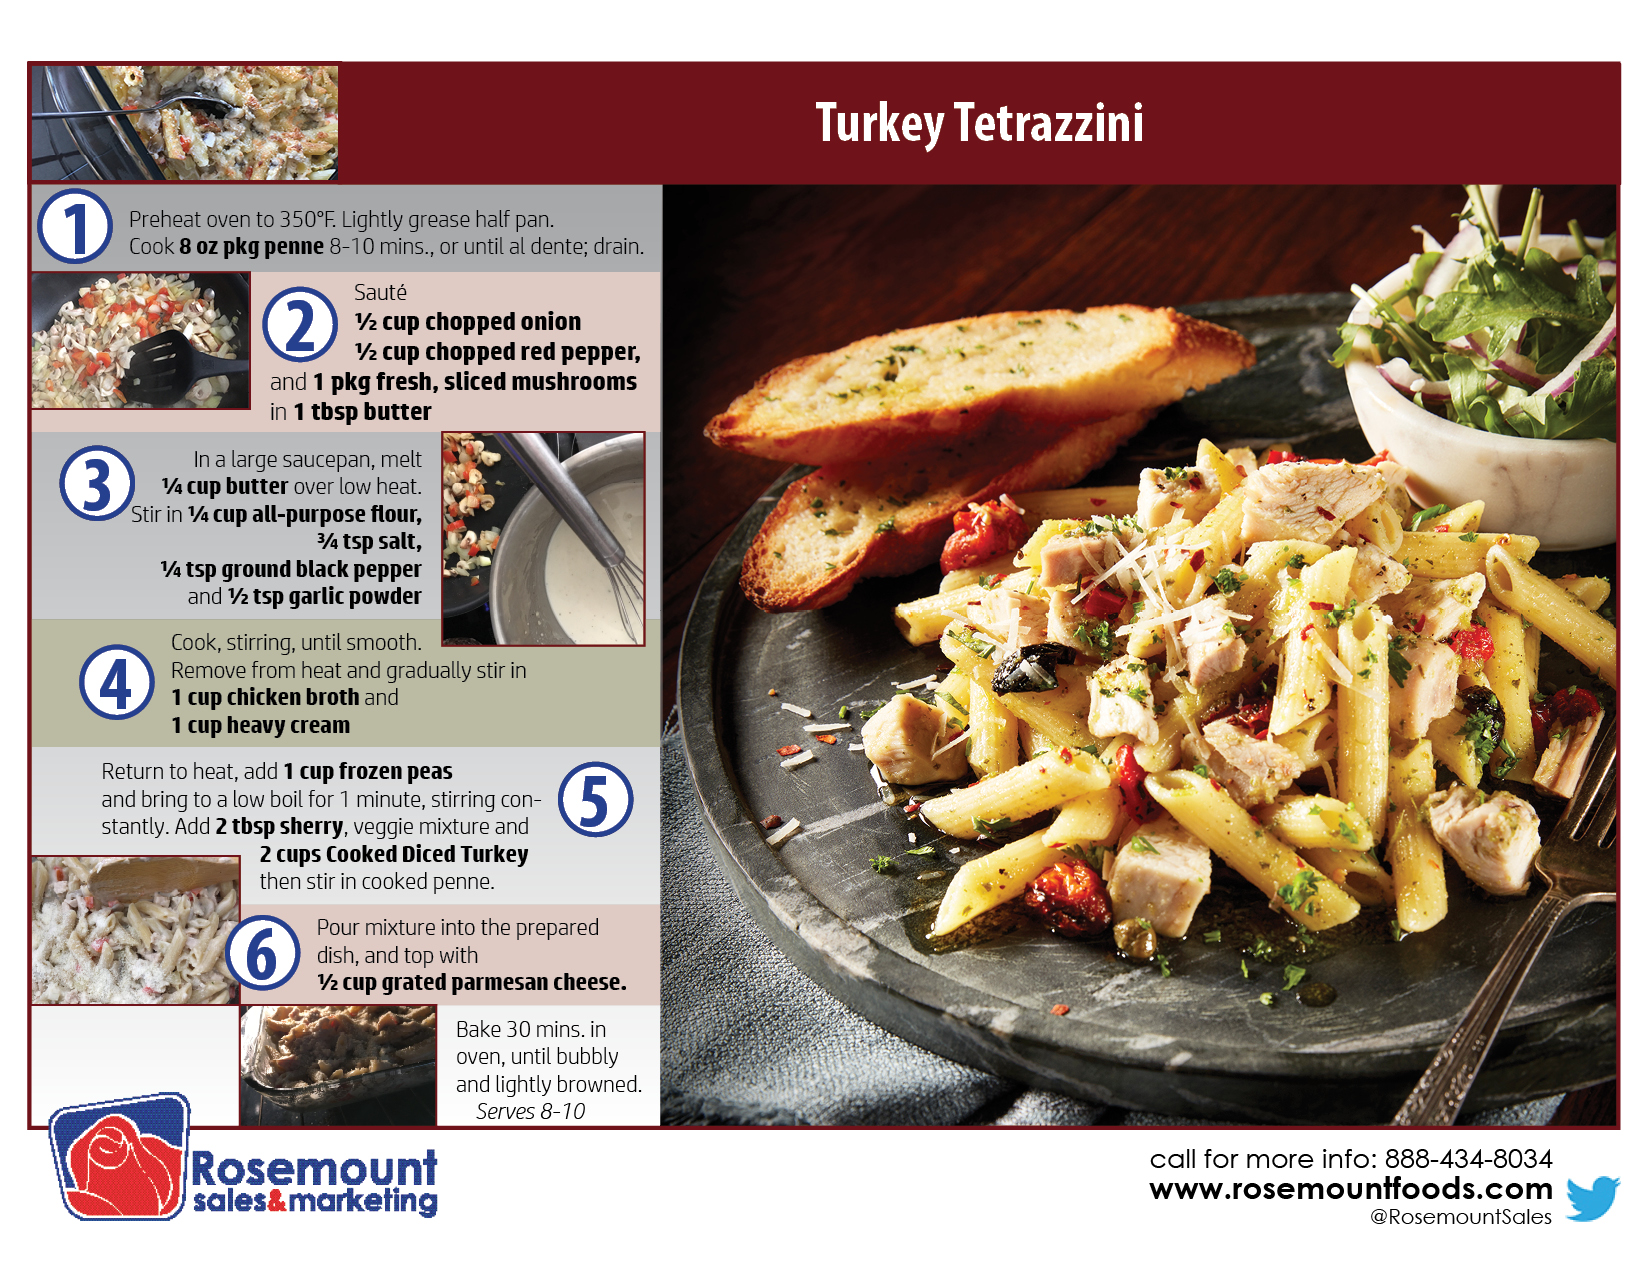 Recipe idea - Turkey Tetrazinni